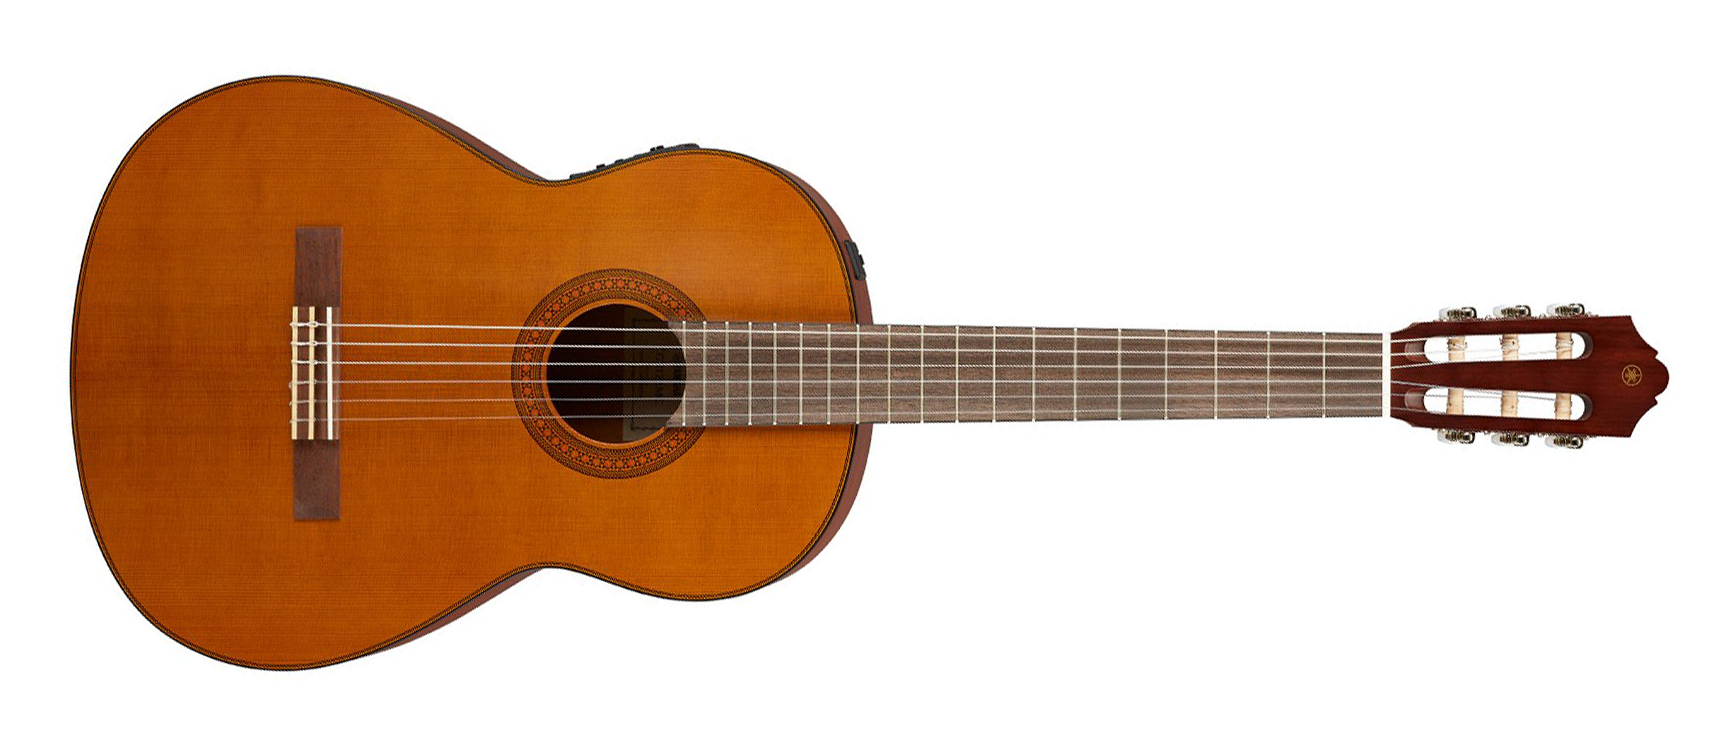 Yamaha CGX122MC 6-String RH Classical Guitar w/ Cedar Top